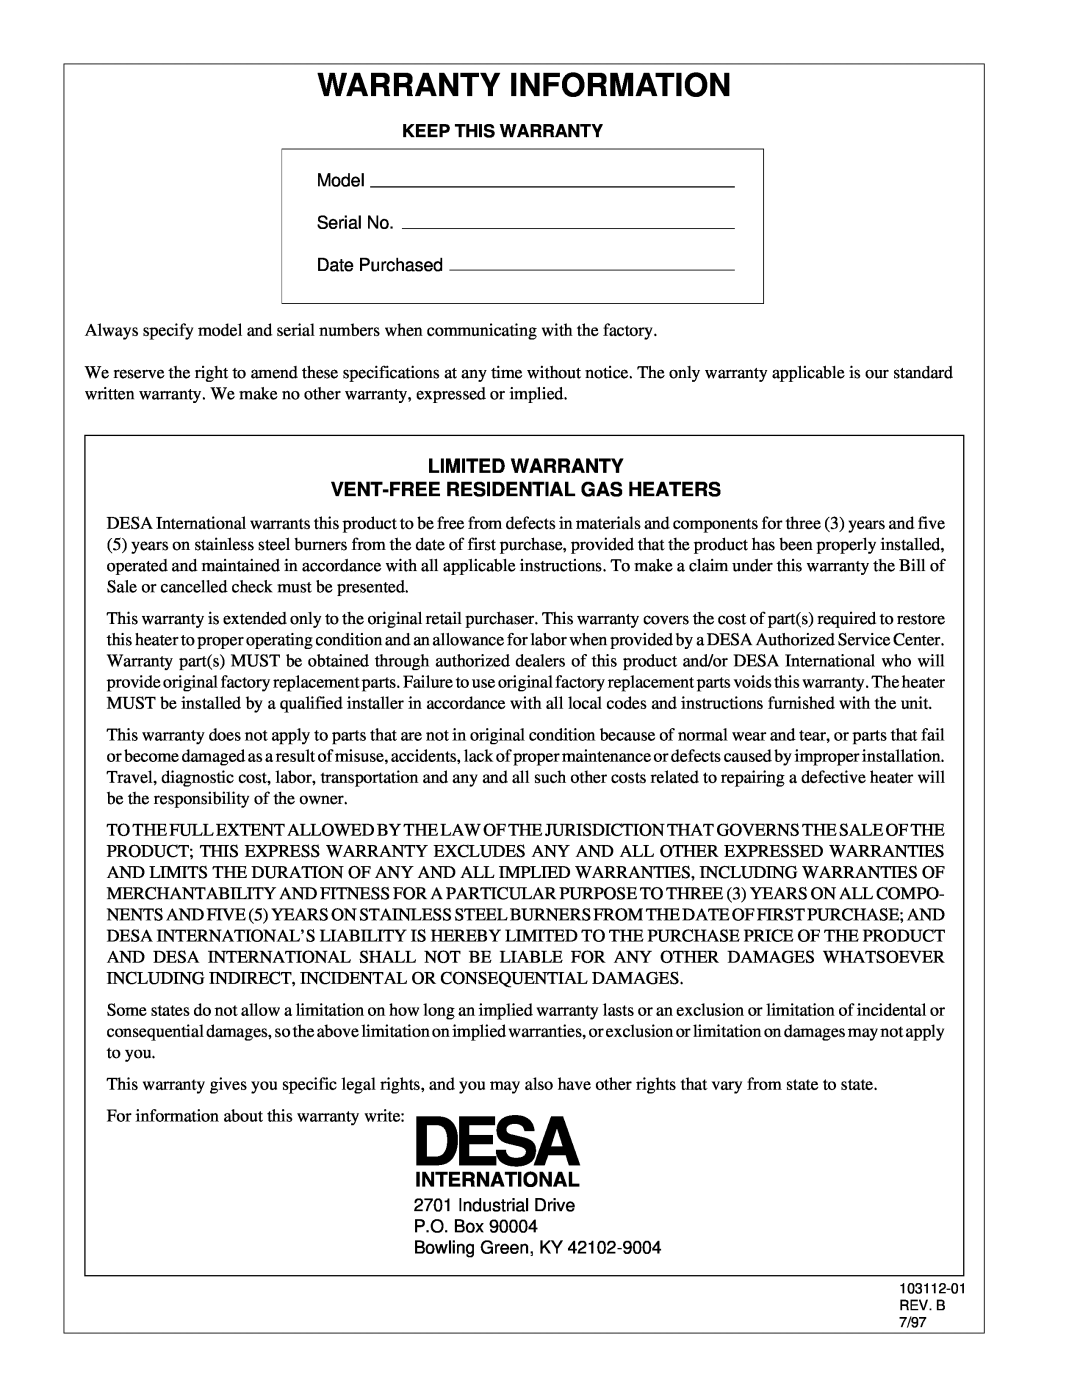 Desa 6000 BTU/HR installation manual Warranty Information, Limited Warranty Vent-Free Residential Gas Heaters 